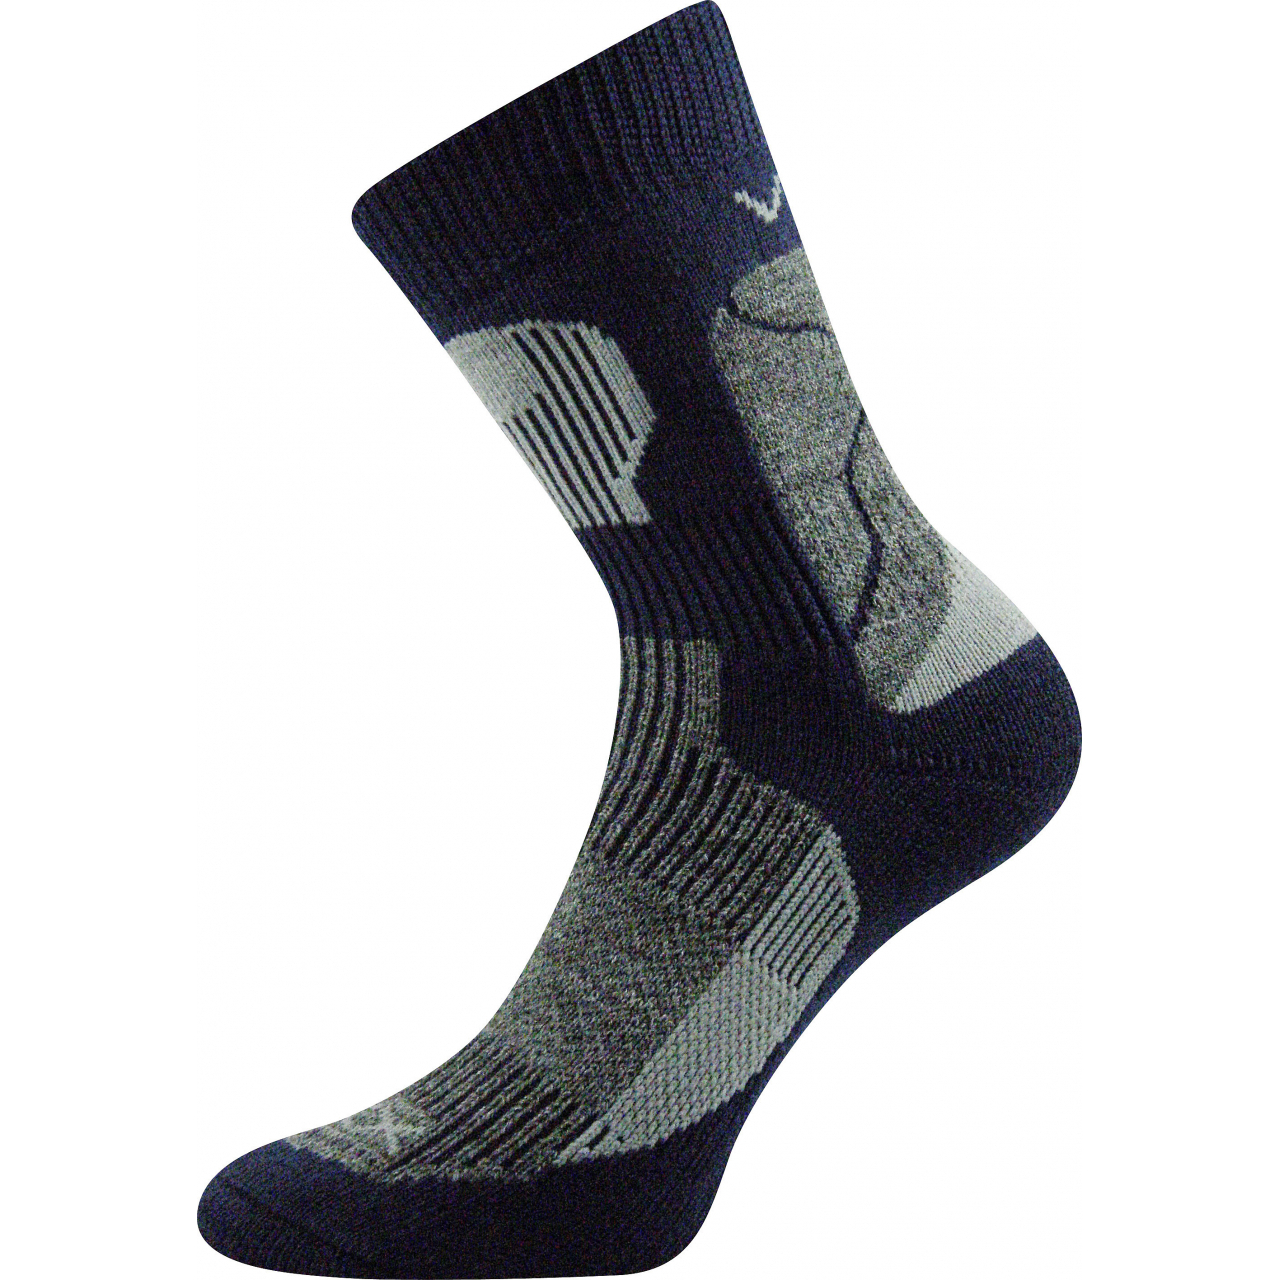 Ponožky unisex termo Voxx Treking - tmavě modré-šedé, 35-37